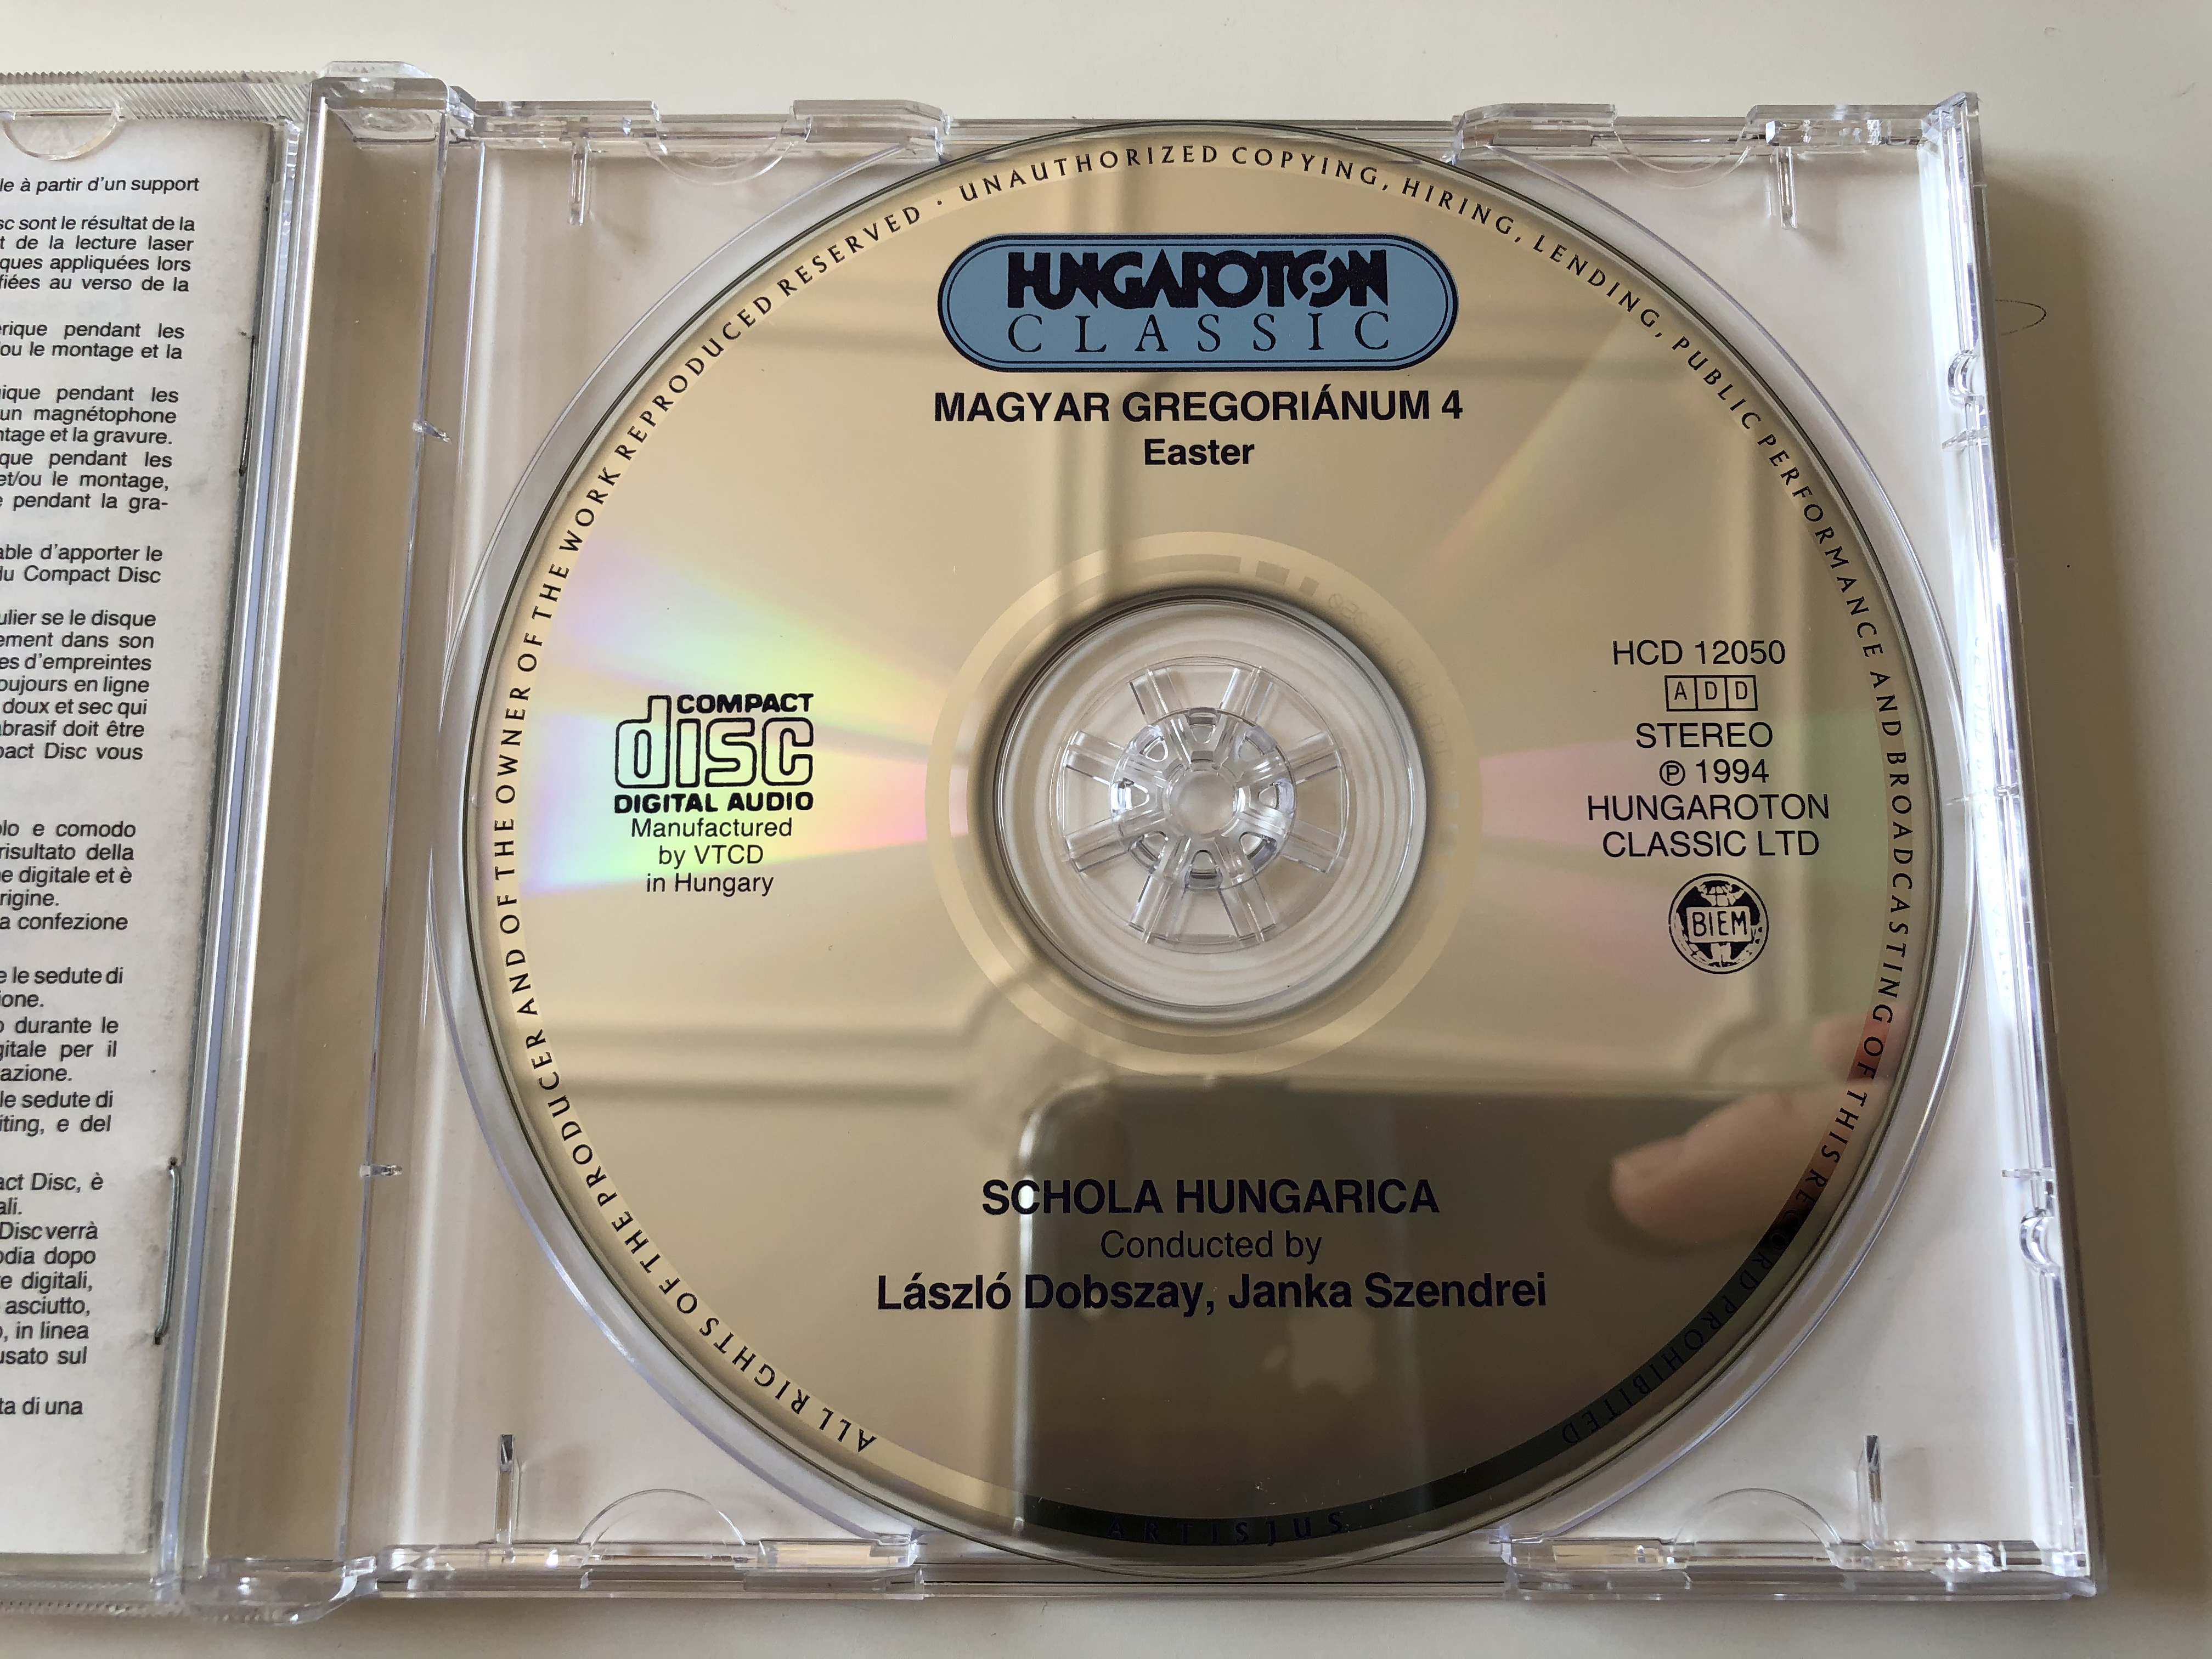 magyar-gregori-num-4-gregorian-chants-from-medieval-hungary-easter-schola-hungarica-hungaroton-classic-audio-cd-1994-stereo-hcd-12050-8-.jpg